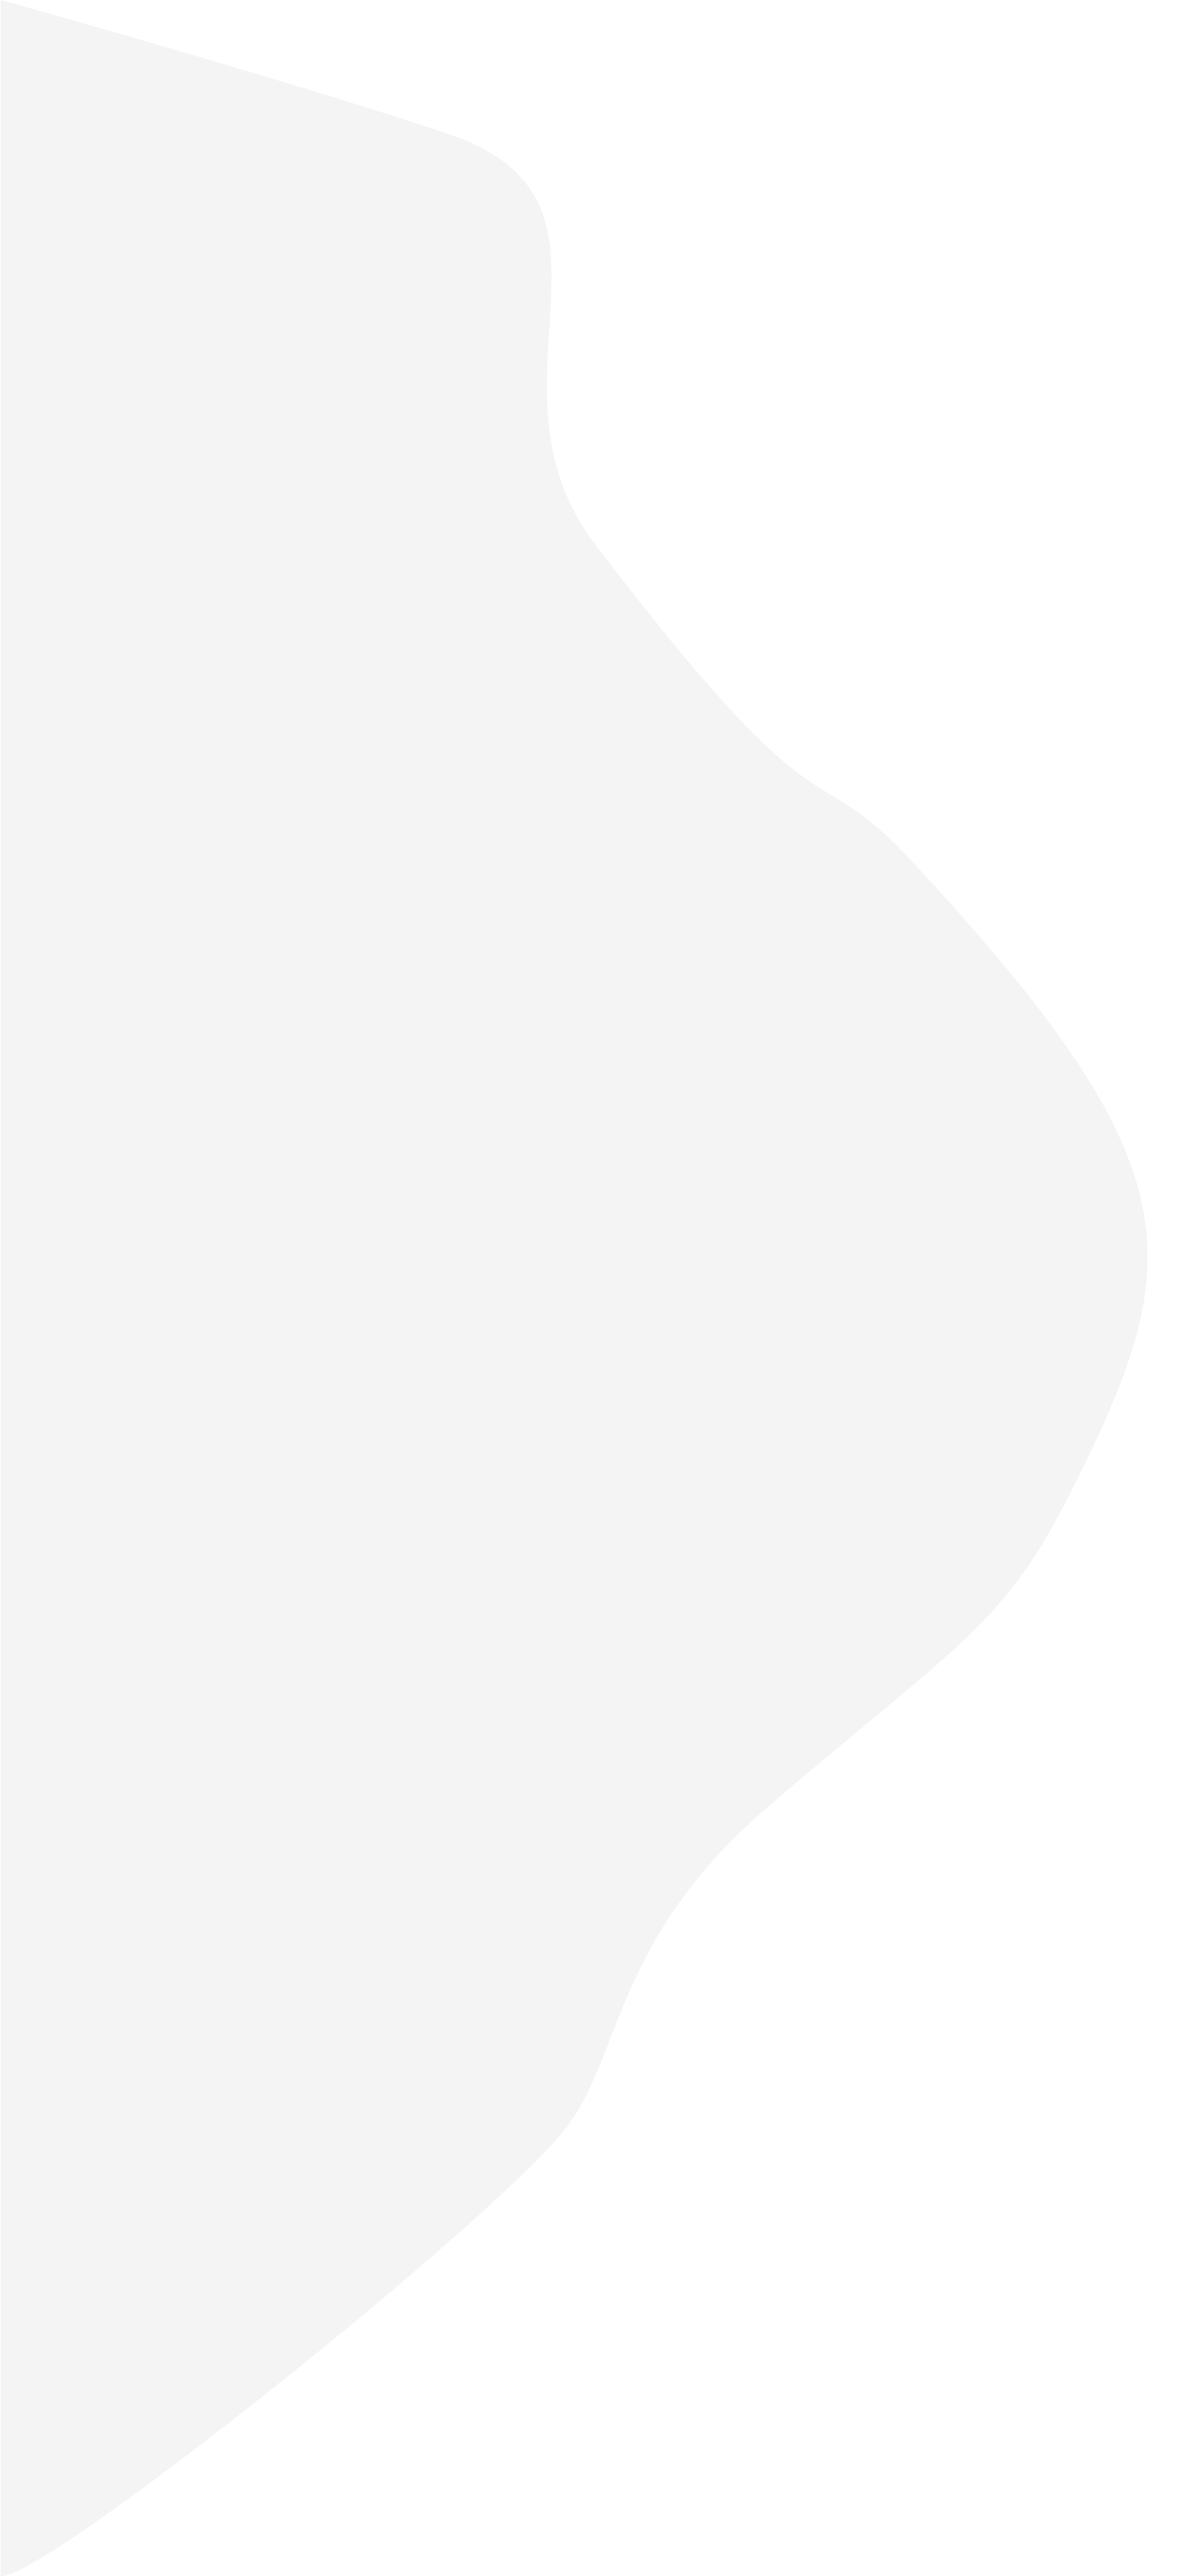 grey curved shape